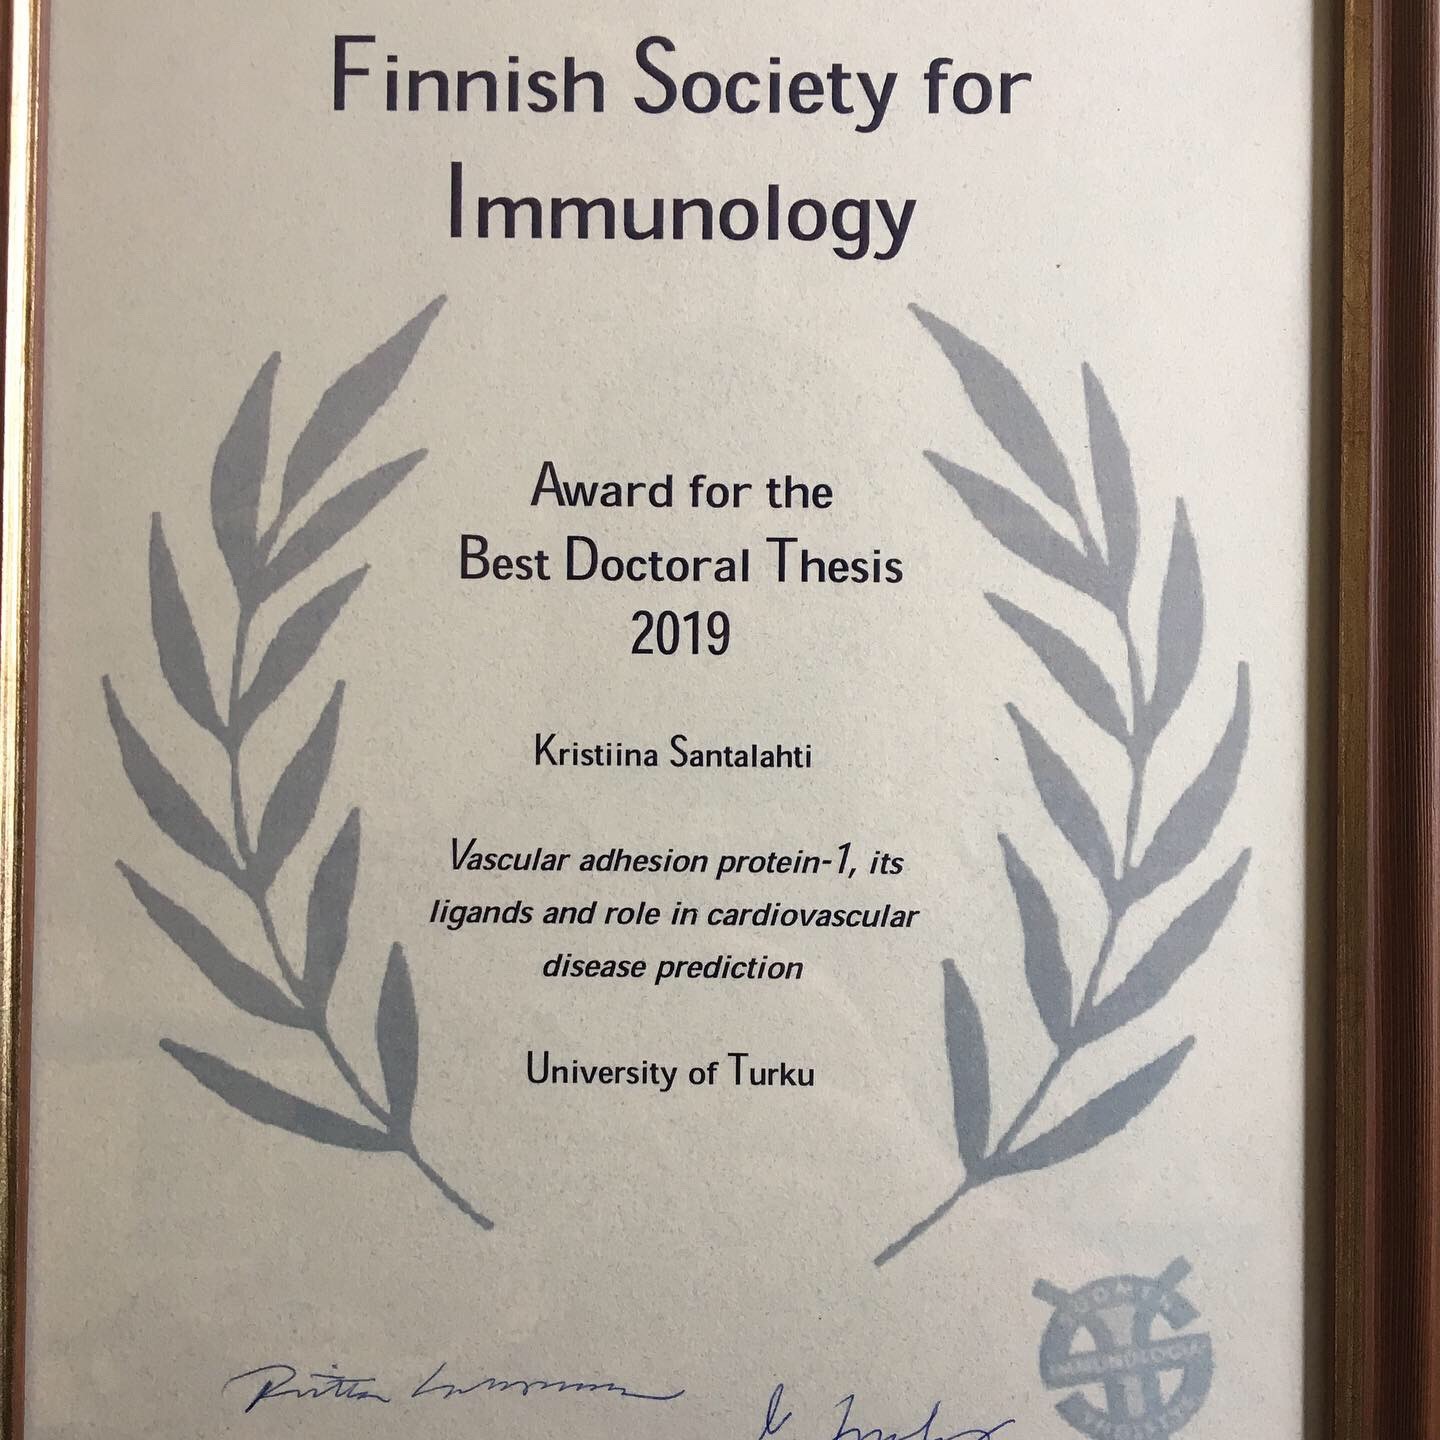 Kristiina Santalahti, award for the best doctoral thesis 2019 